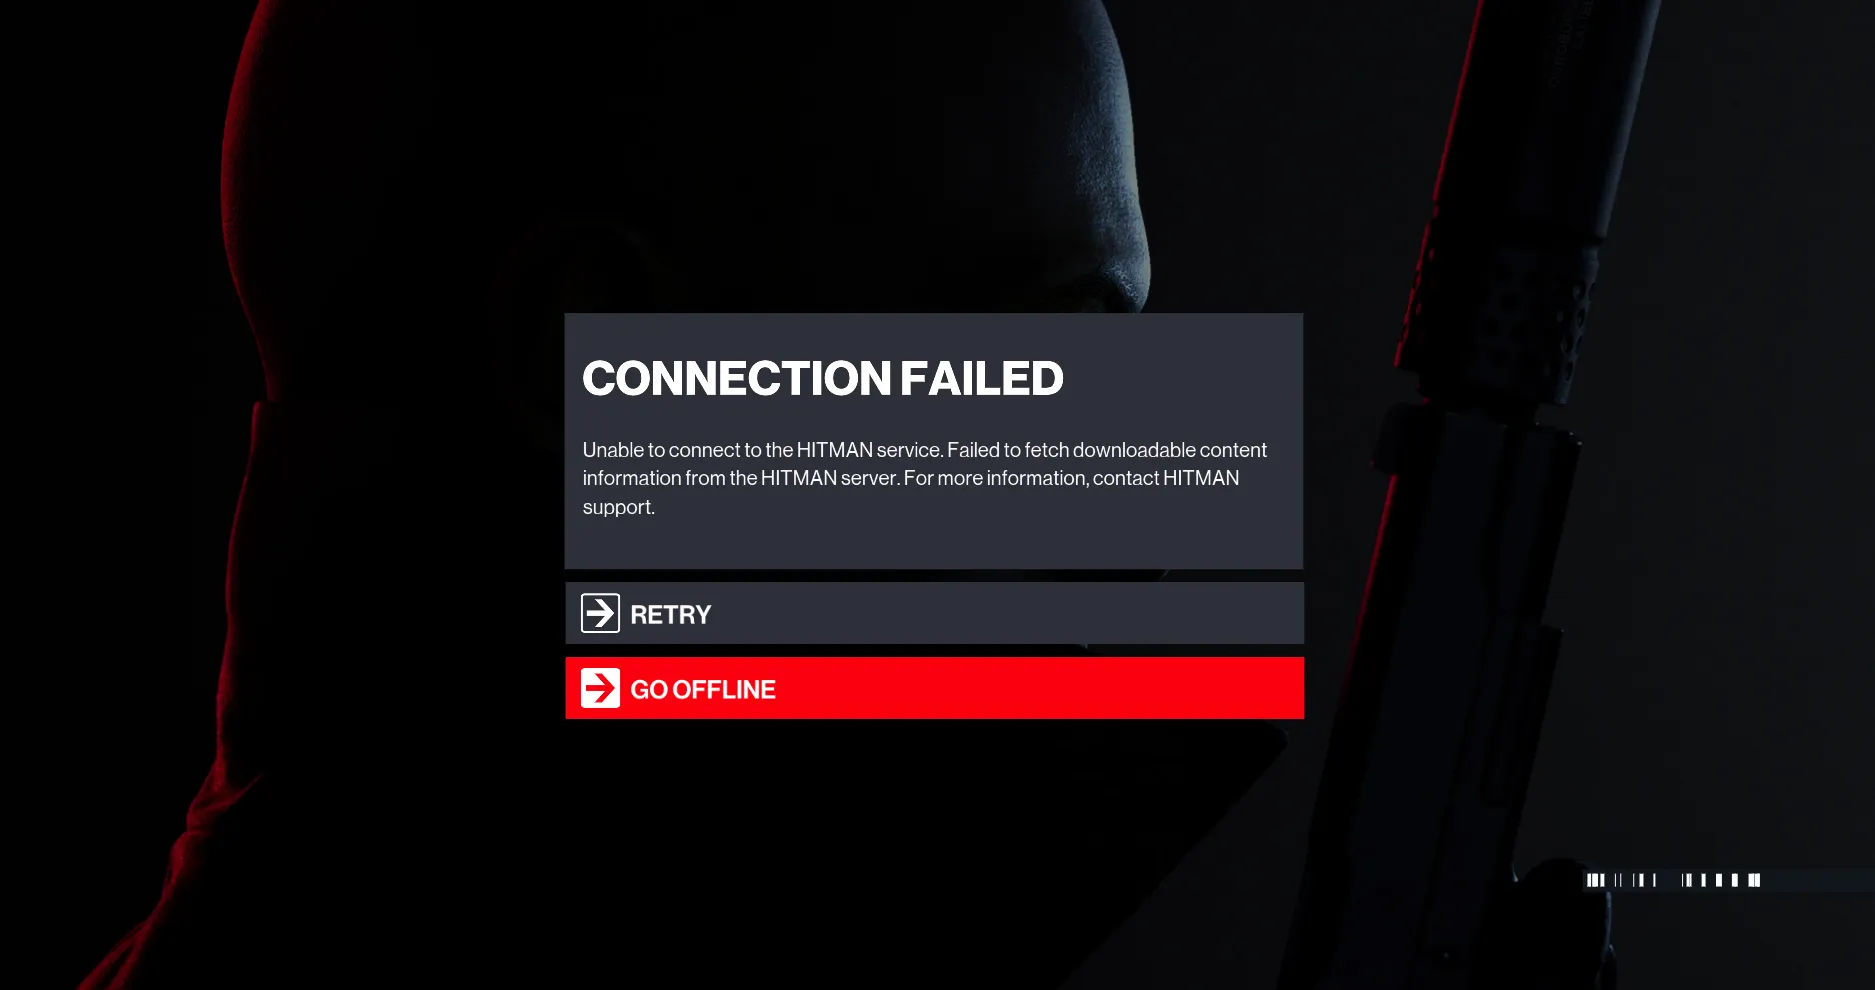 Connection failed 4 retries